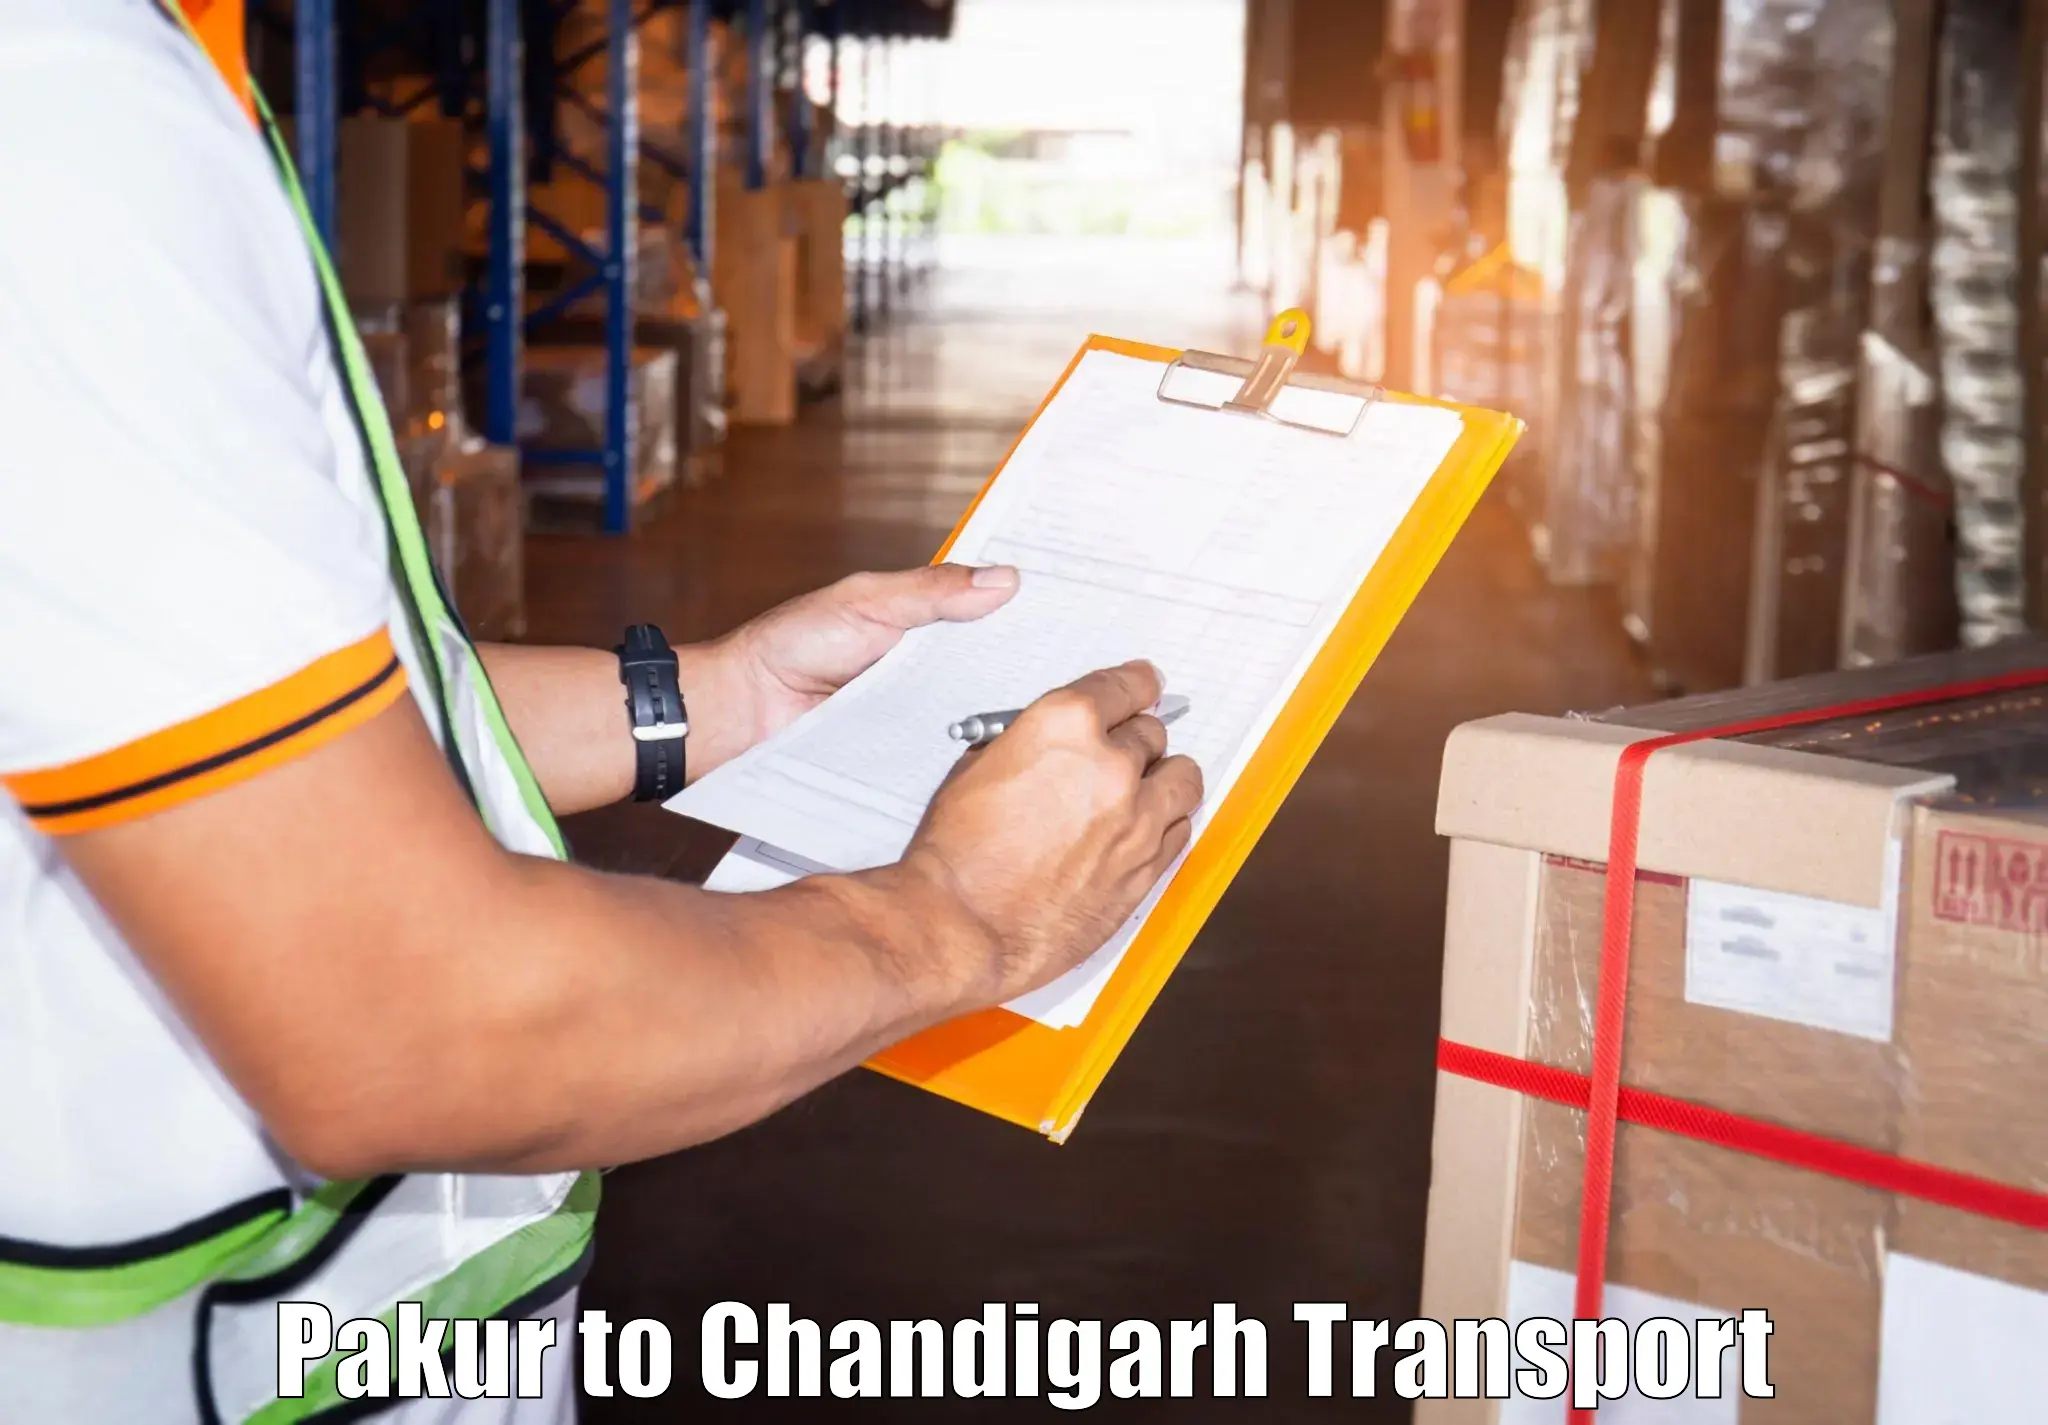 Transport in sharing Pakur to Kharar